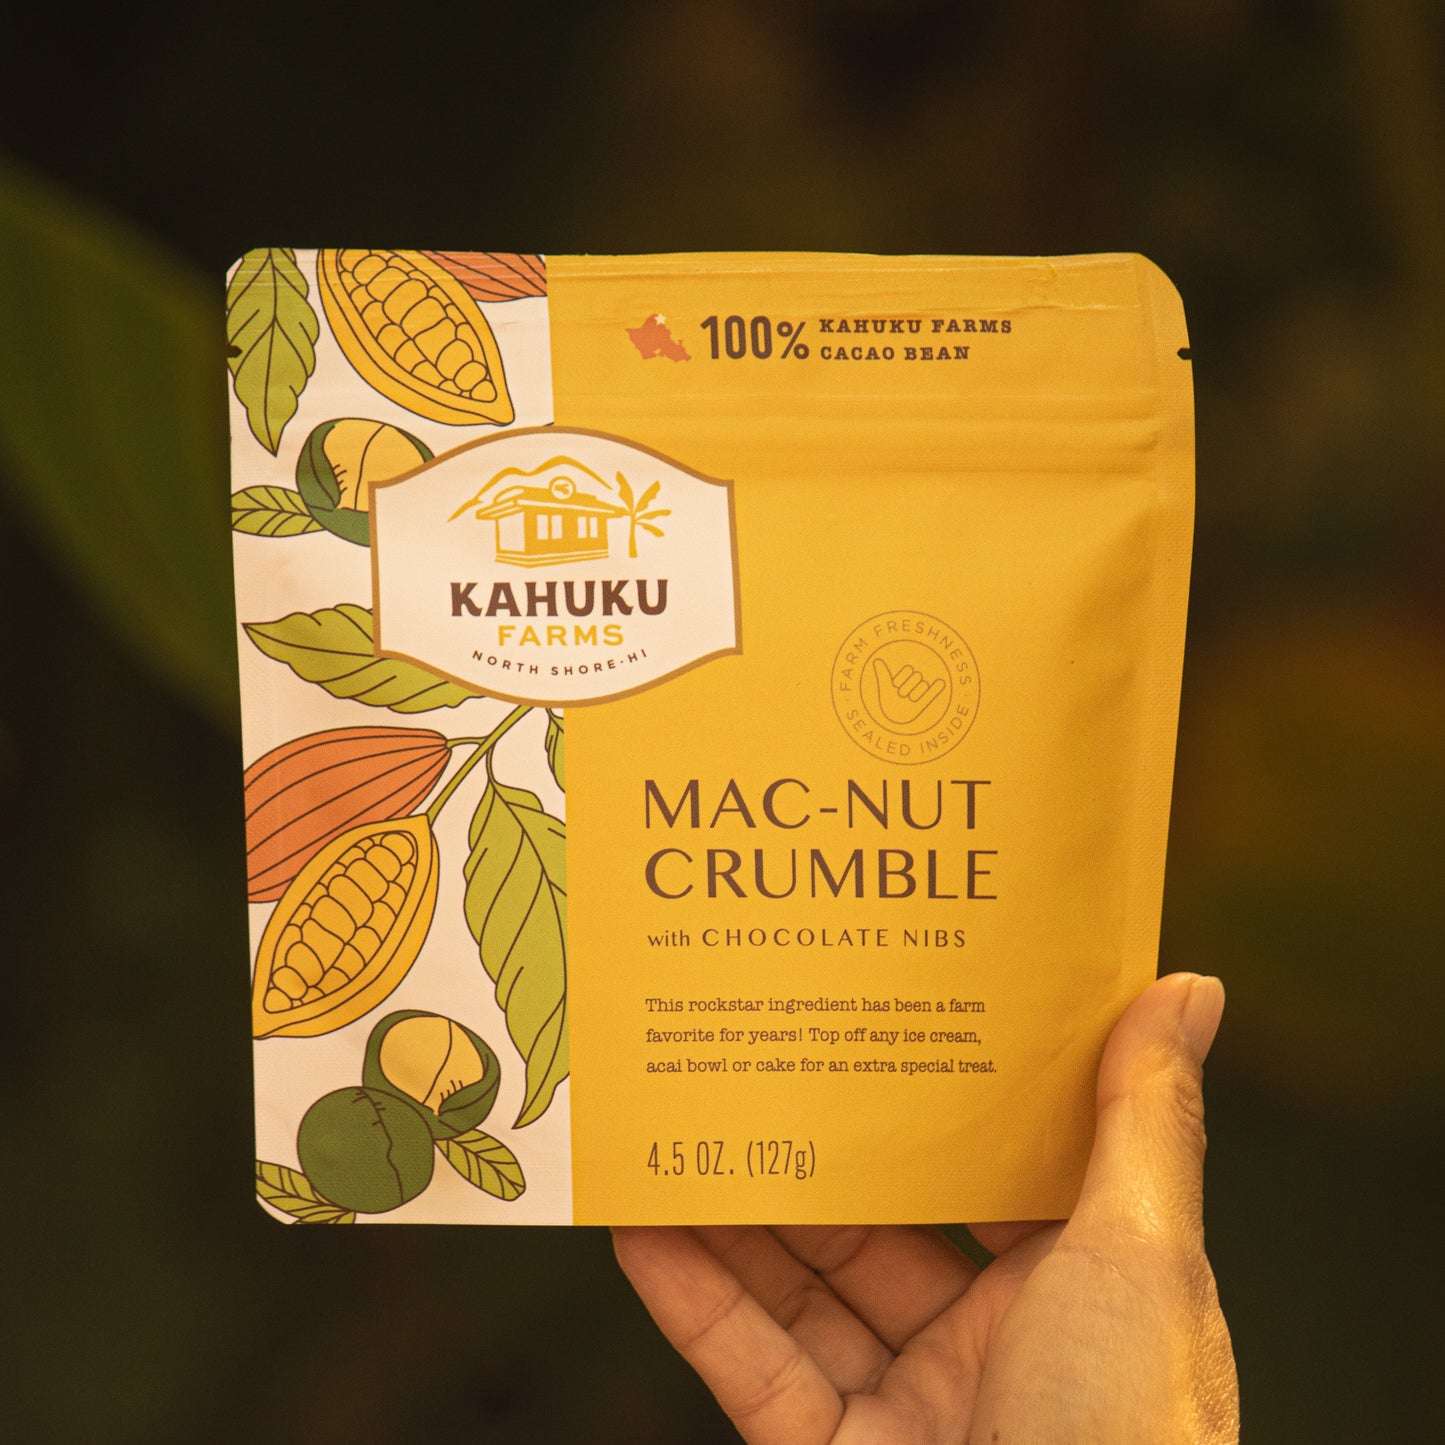 Mac-Nut Crumble